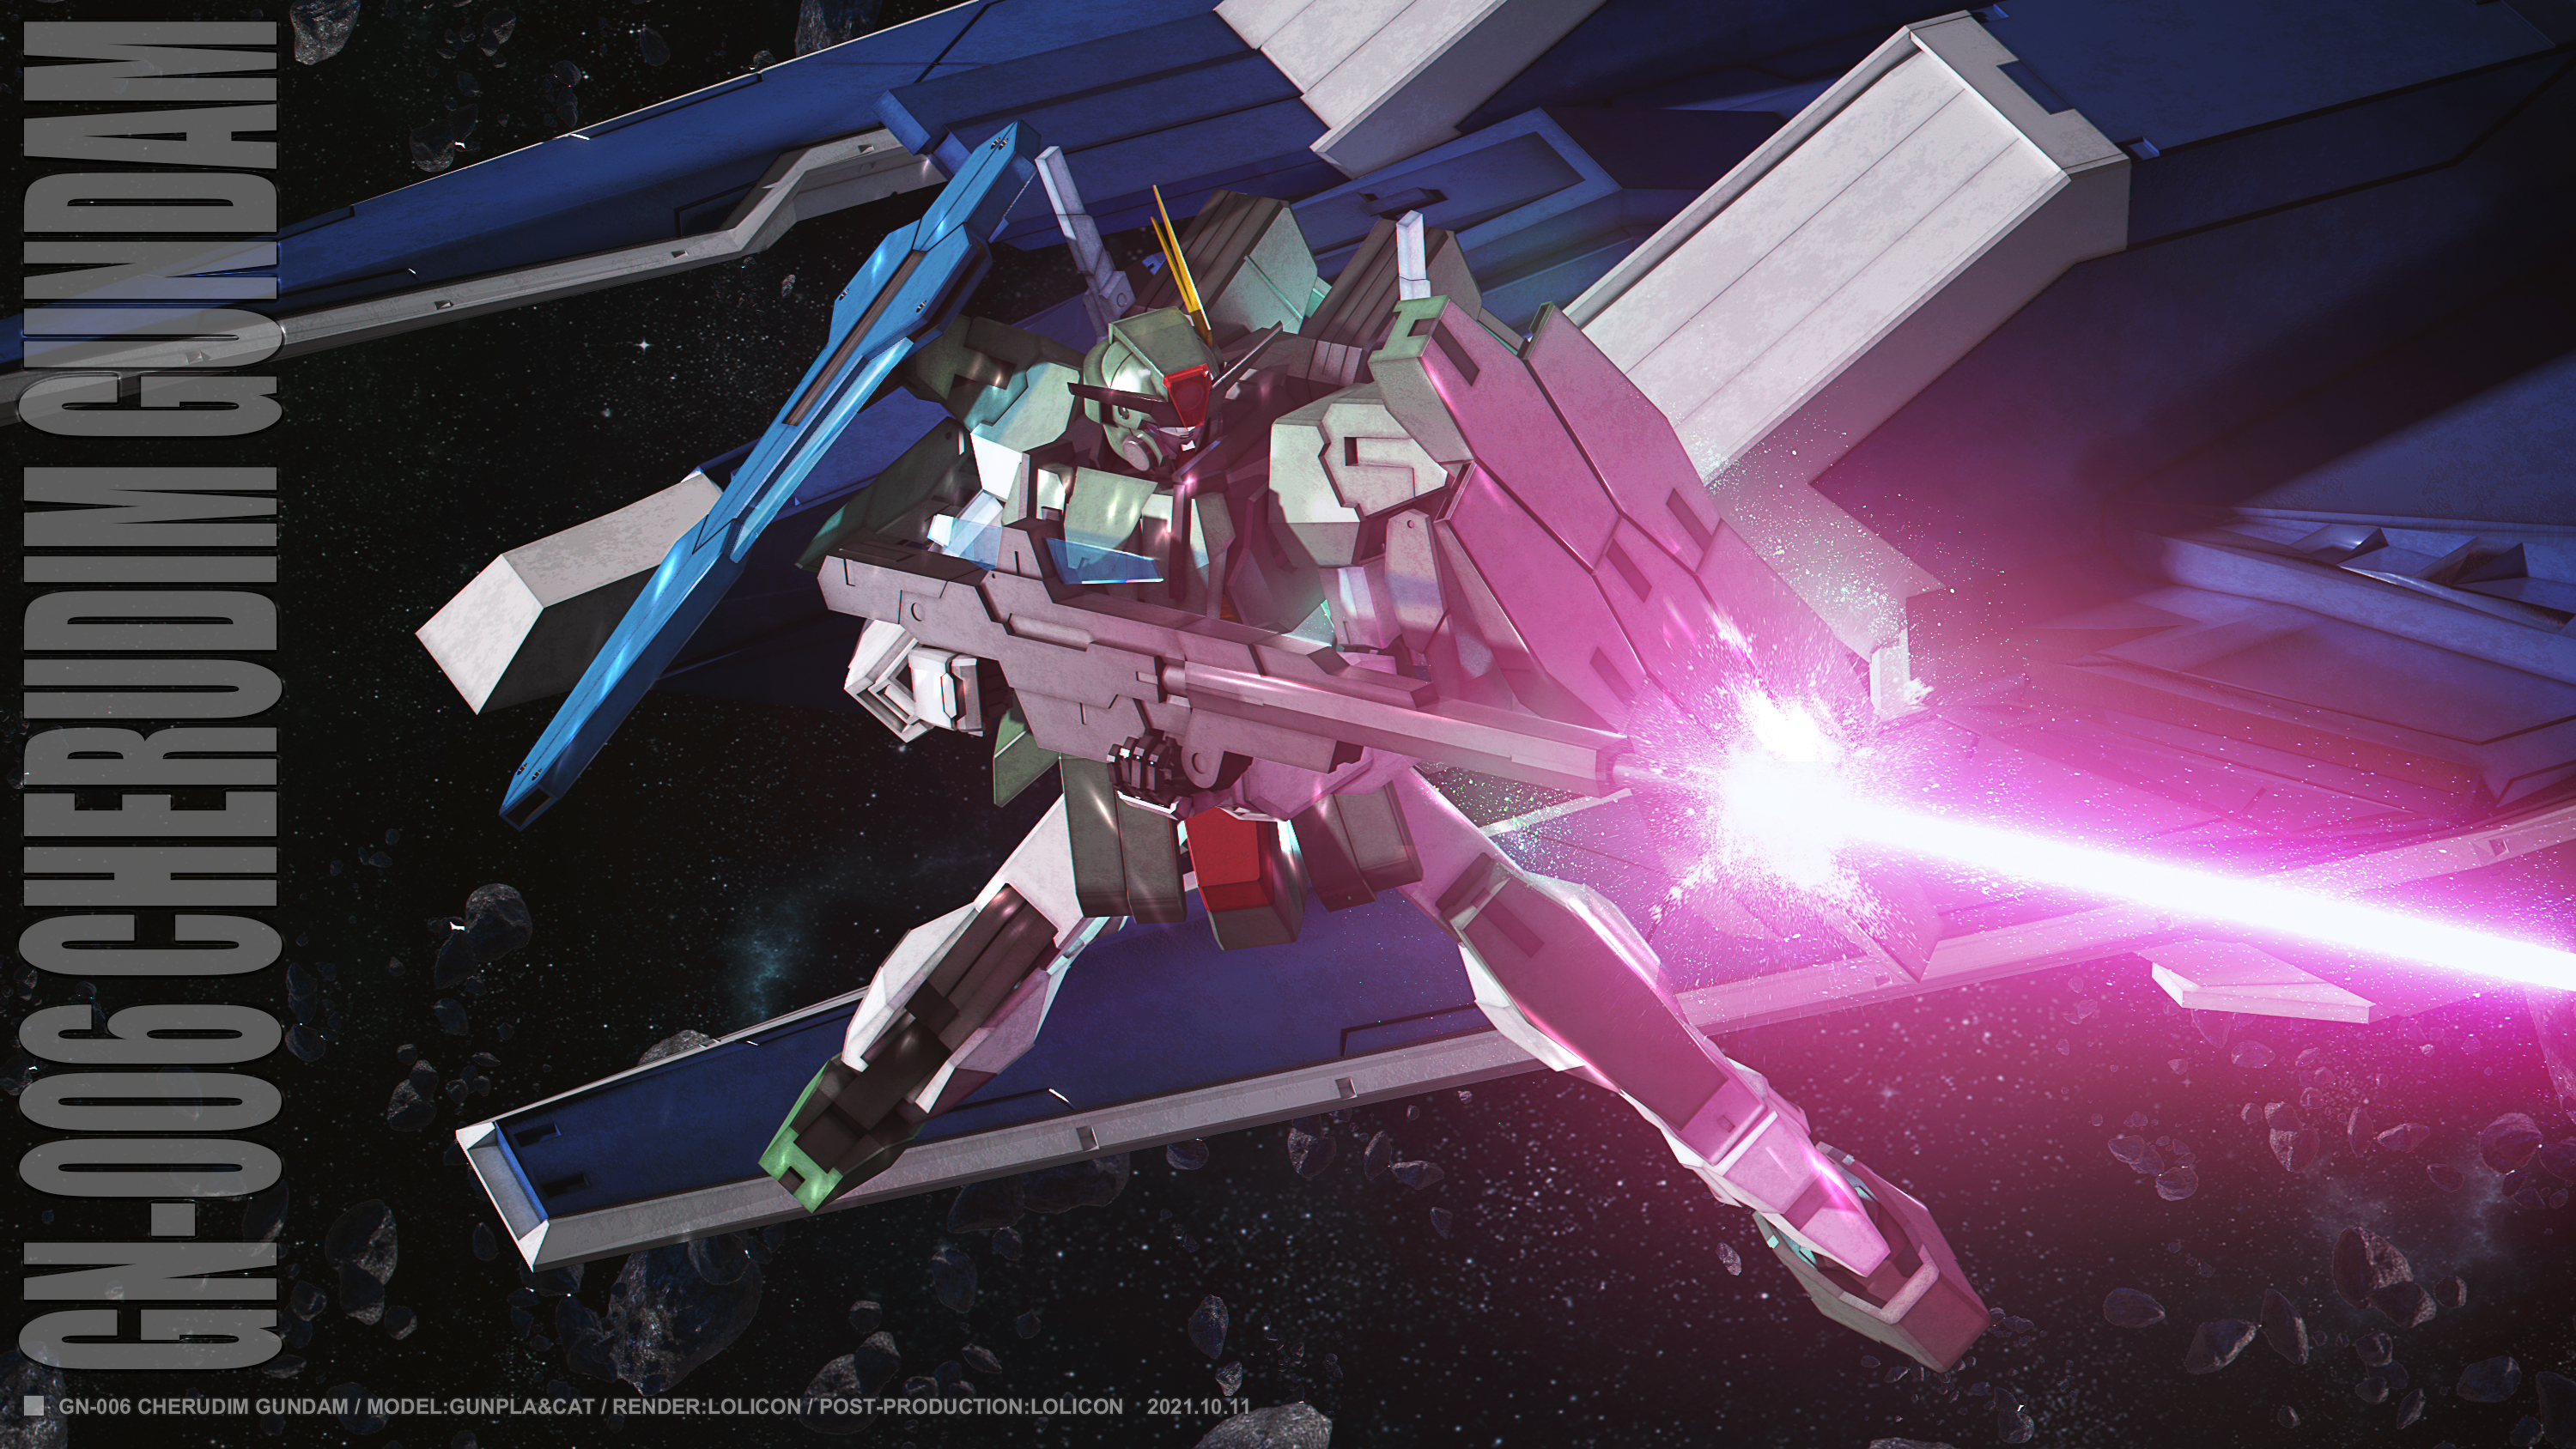 Anime 3000x1688 Cherudim Gundam anime mechs Gundam Mobile Suit Gundam 00 Super Robot Taisen artwork digital art fan art